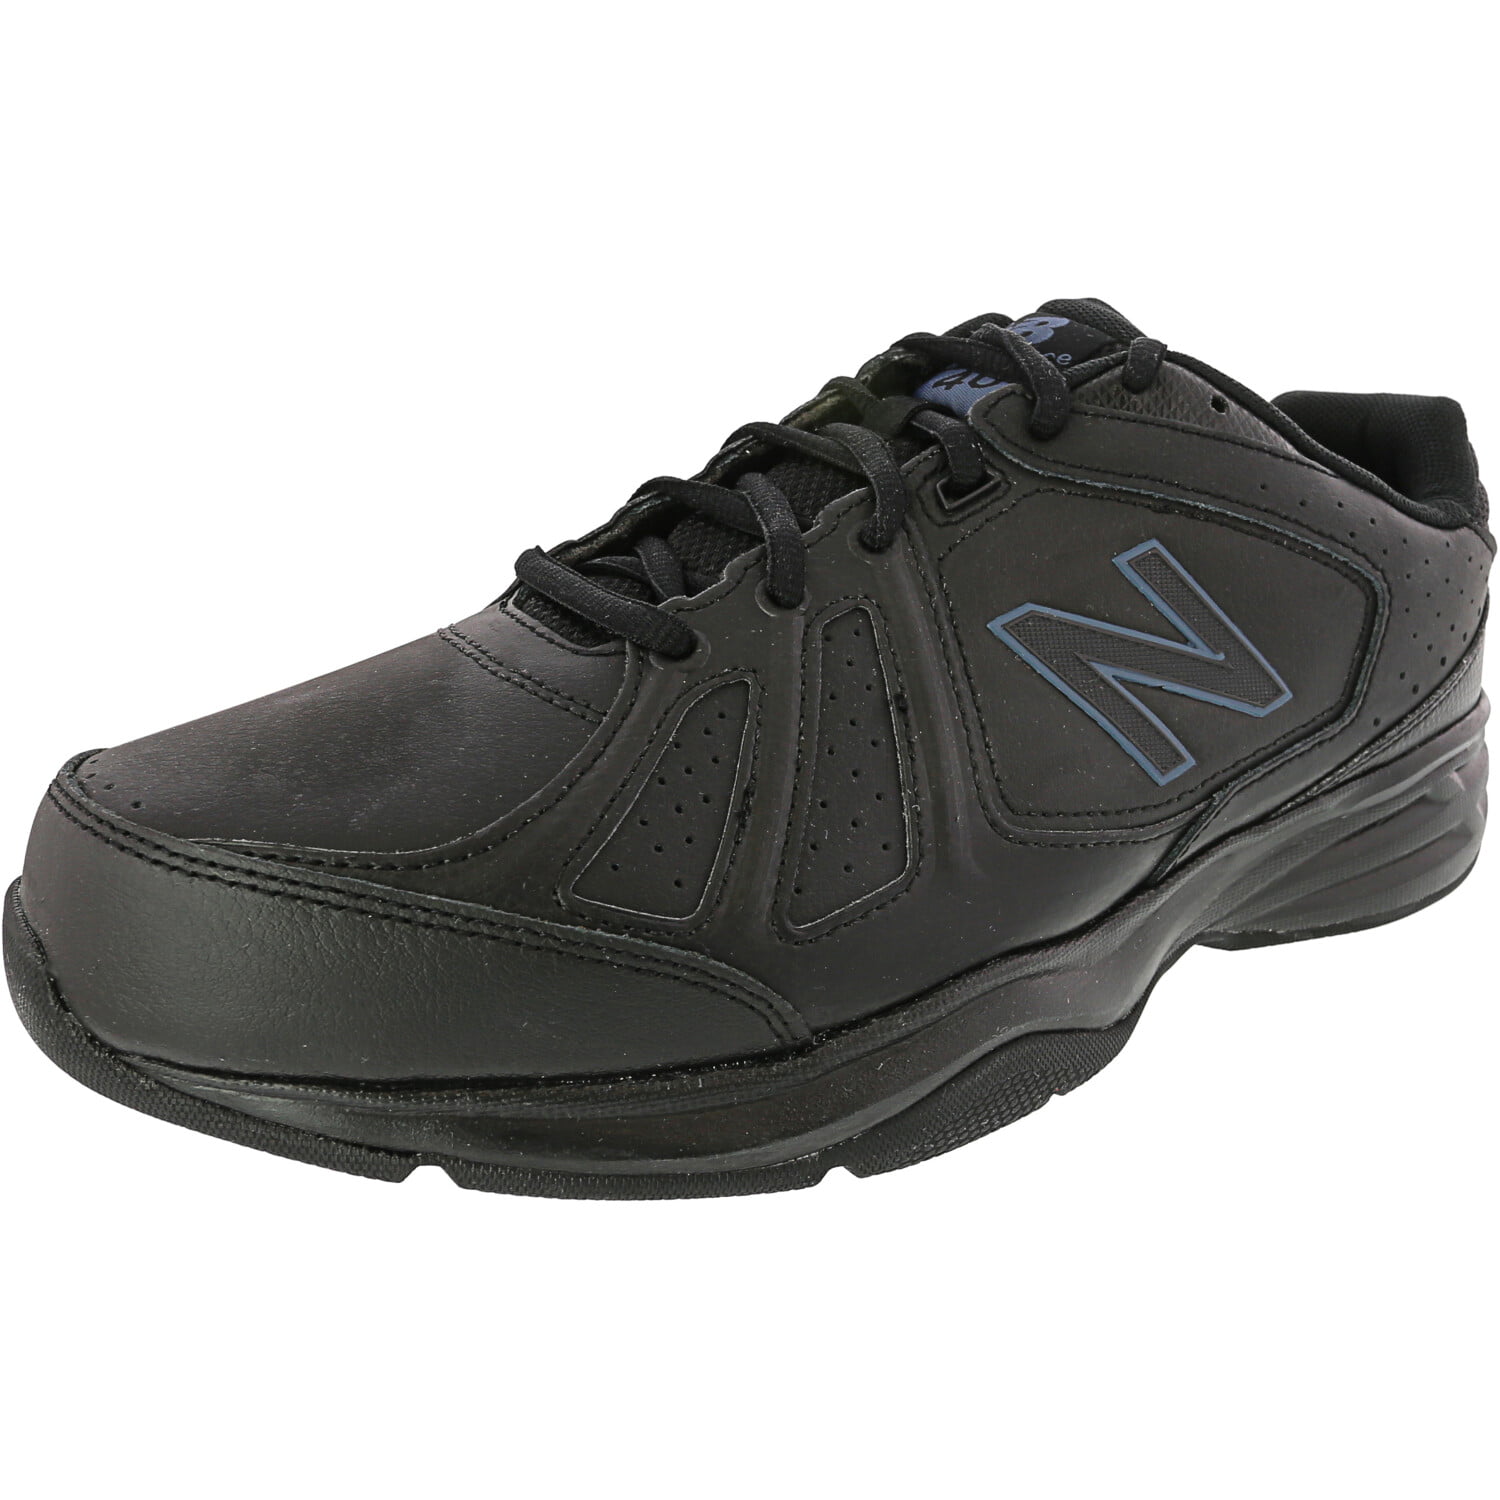 mx409v3 casual comfort training shoe 